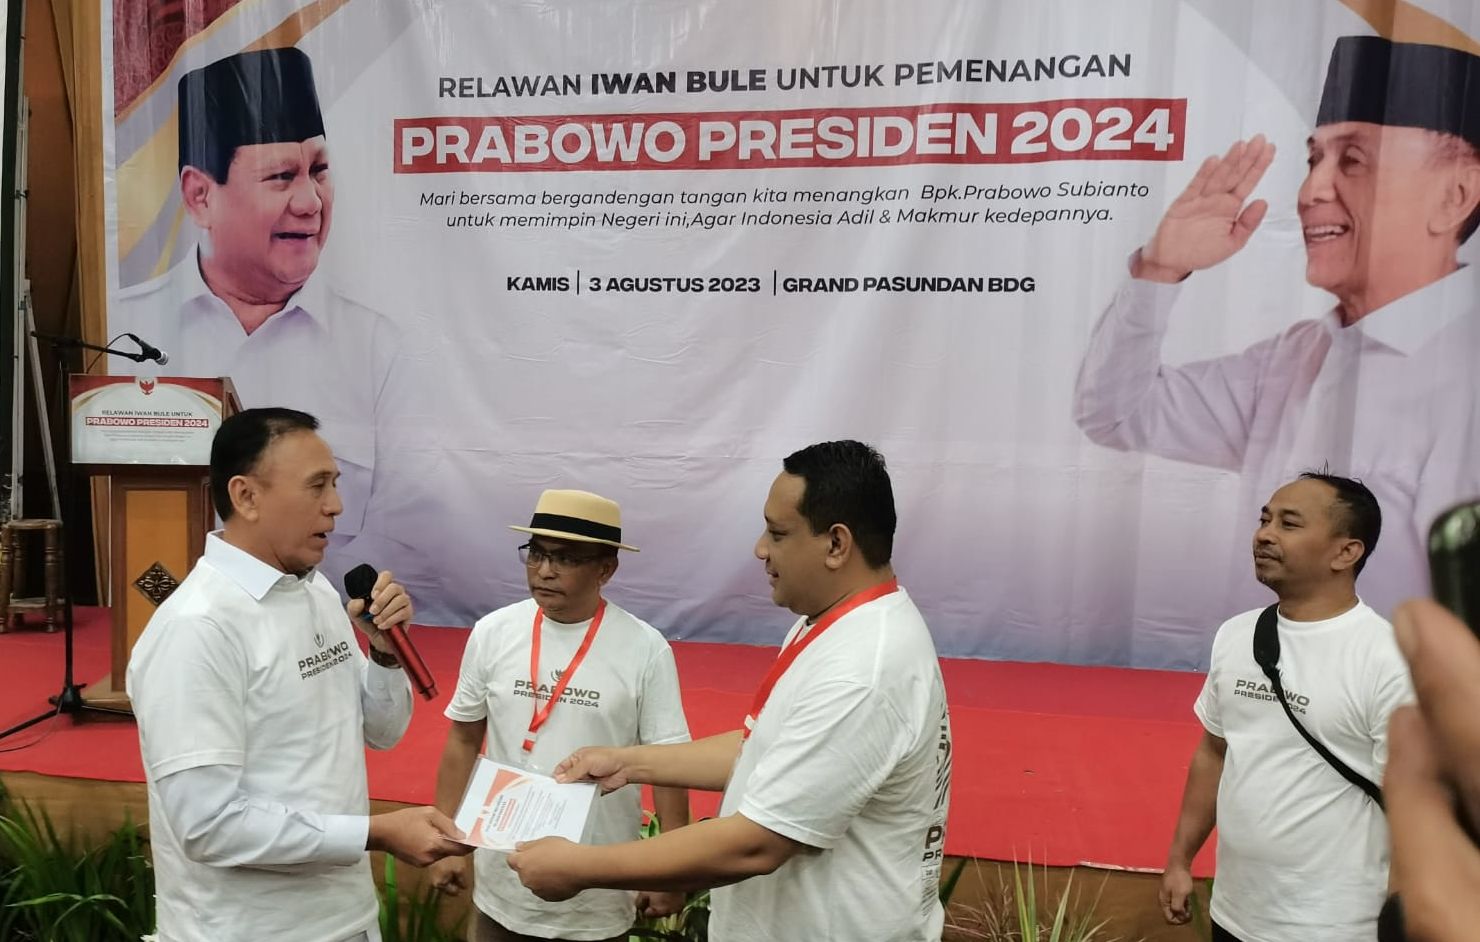 Mochamad Iriawan memimpin konsolidasi Relawan Iwan Bule untuk pemenangan Prabowo Presiden RI 2024, di Hotel Grand Pasundan, Kota Bandung, Kamis, 3 Agustus 2023./Lucky M Lukman/Galamedianews